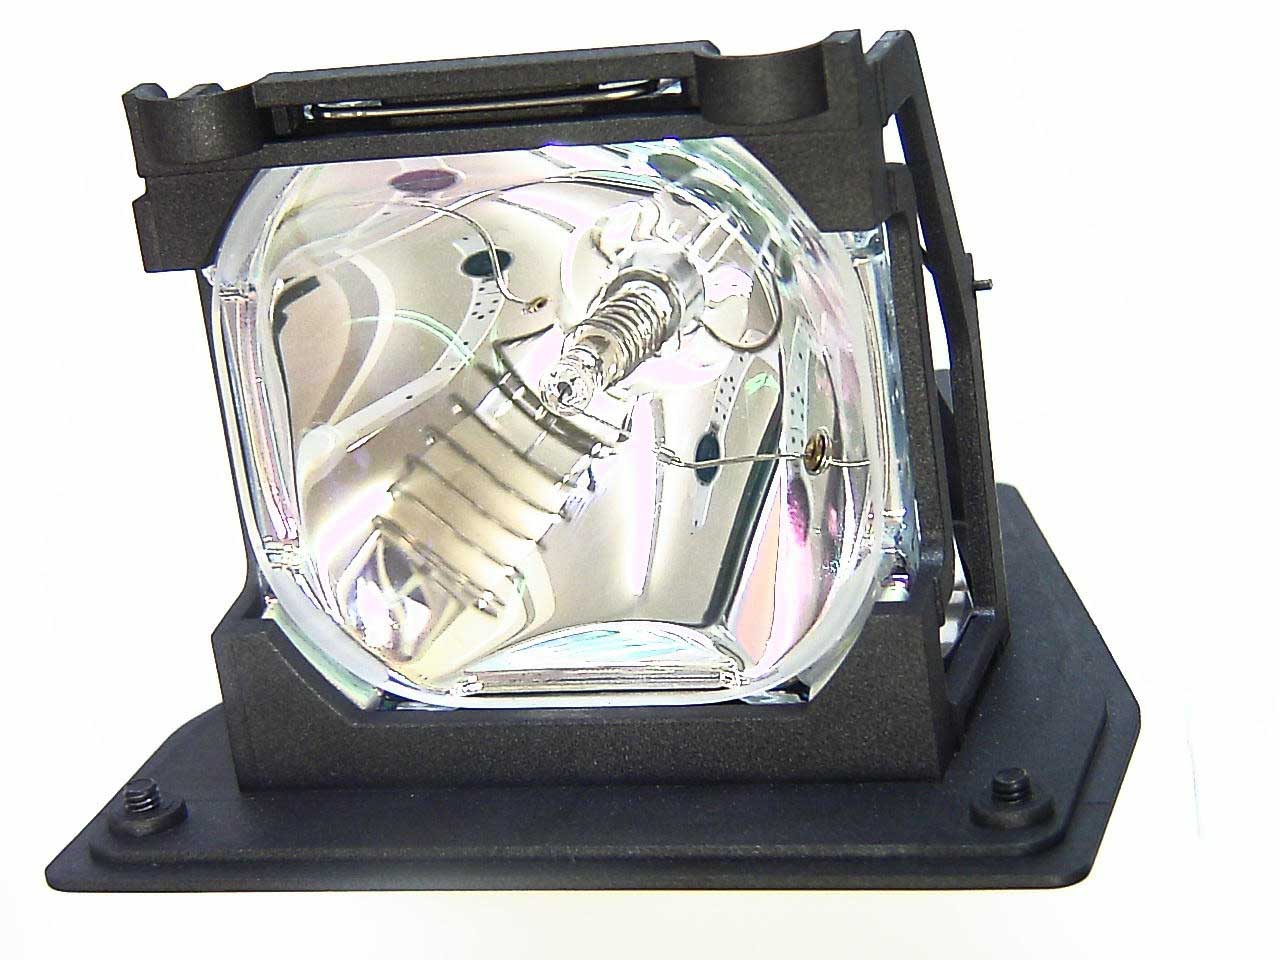 ProjectorEurope Generic Complete PROJECTOREUROPE TRAVELER 757 Projector Lamp projector. Includes 1 year warranty.